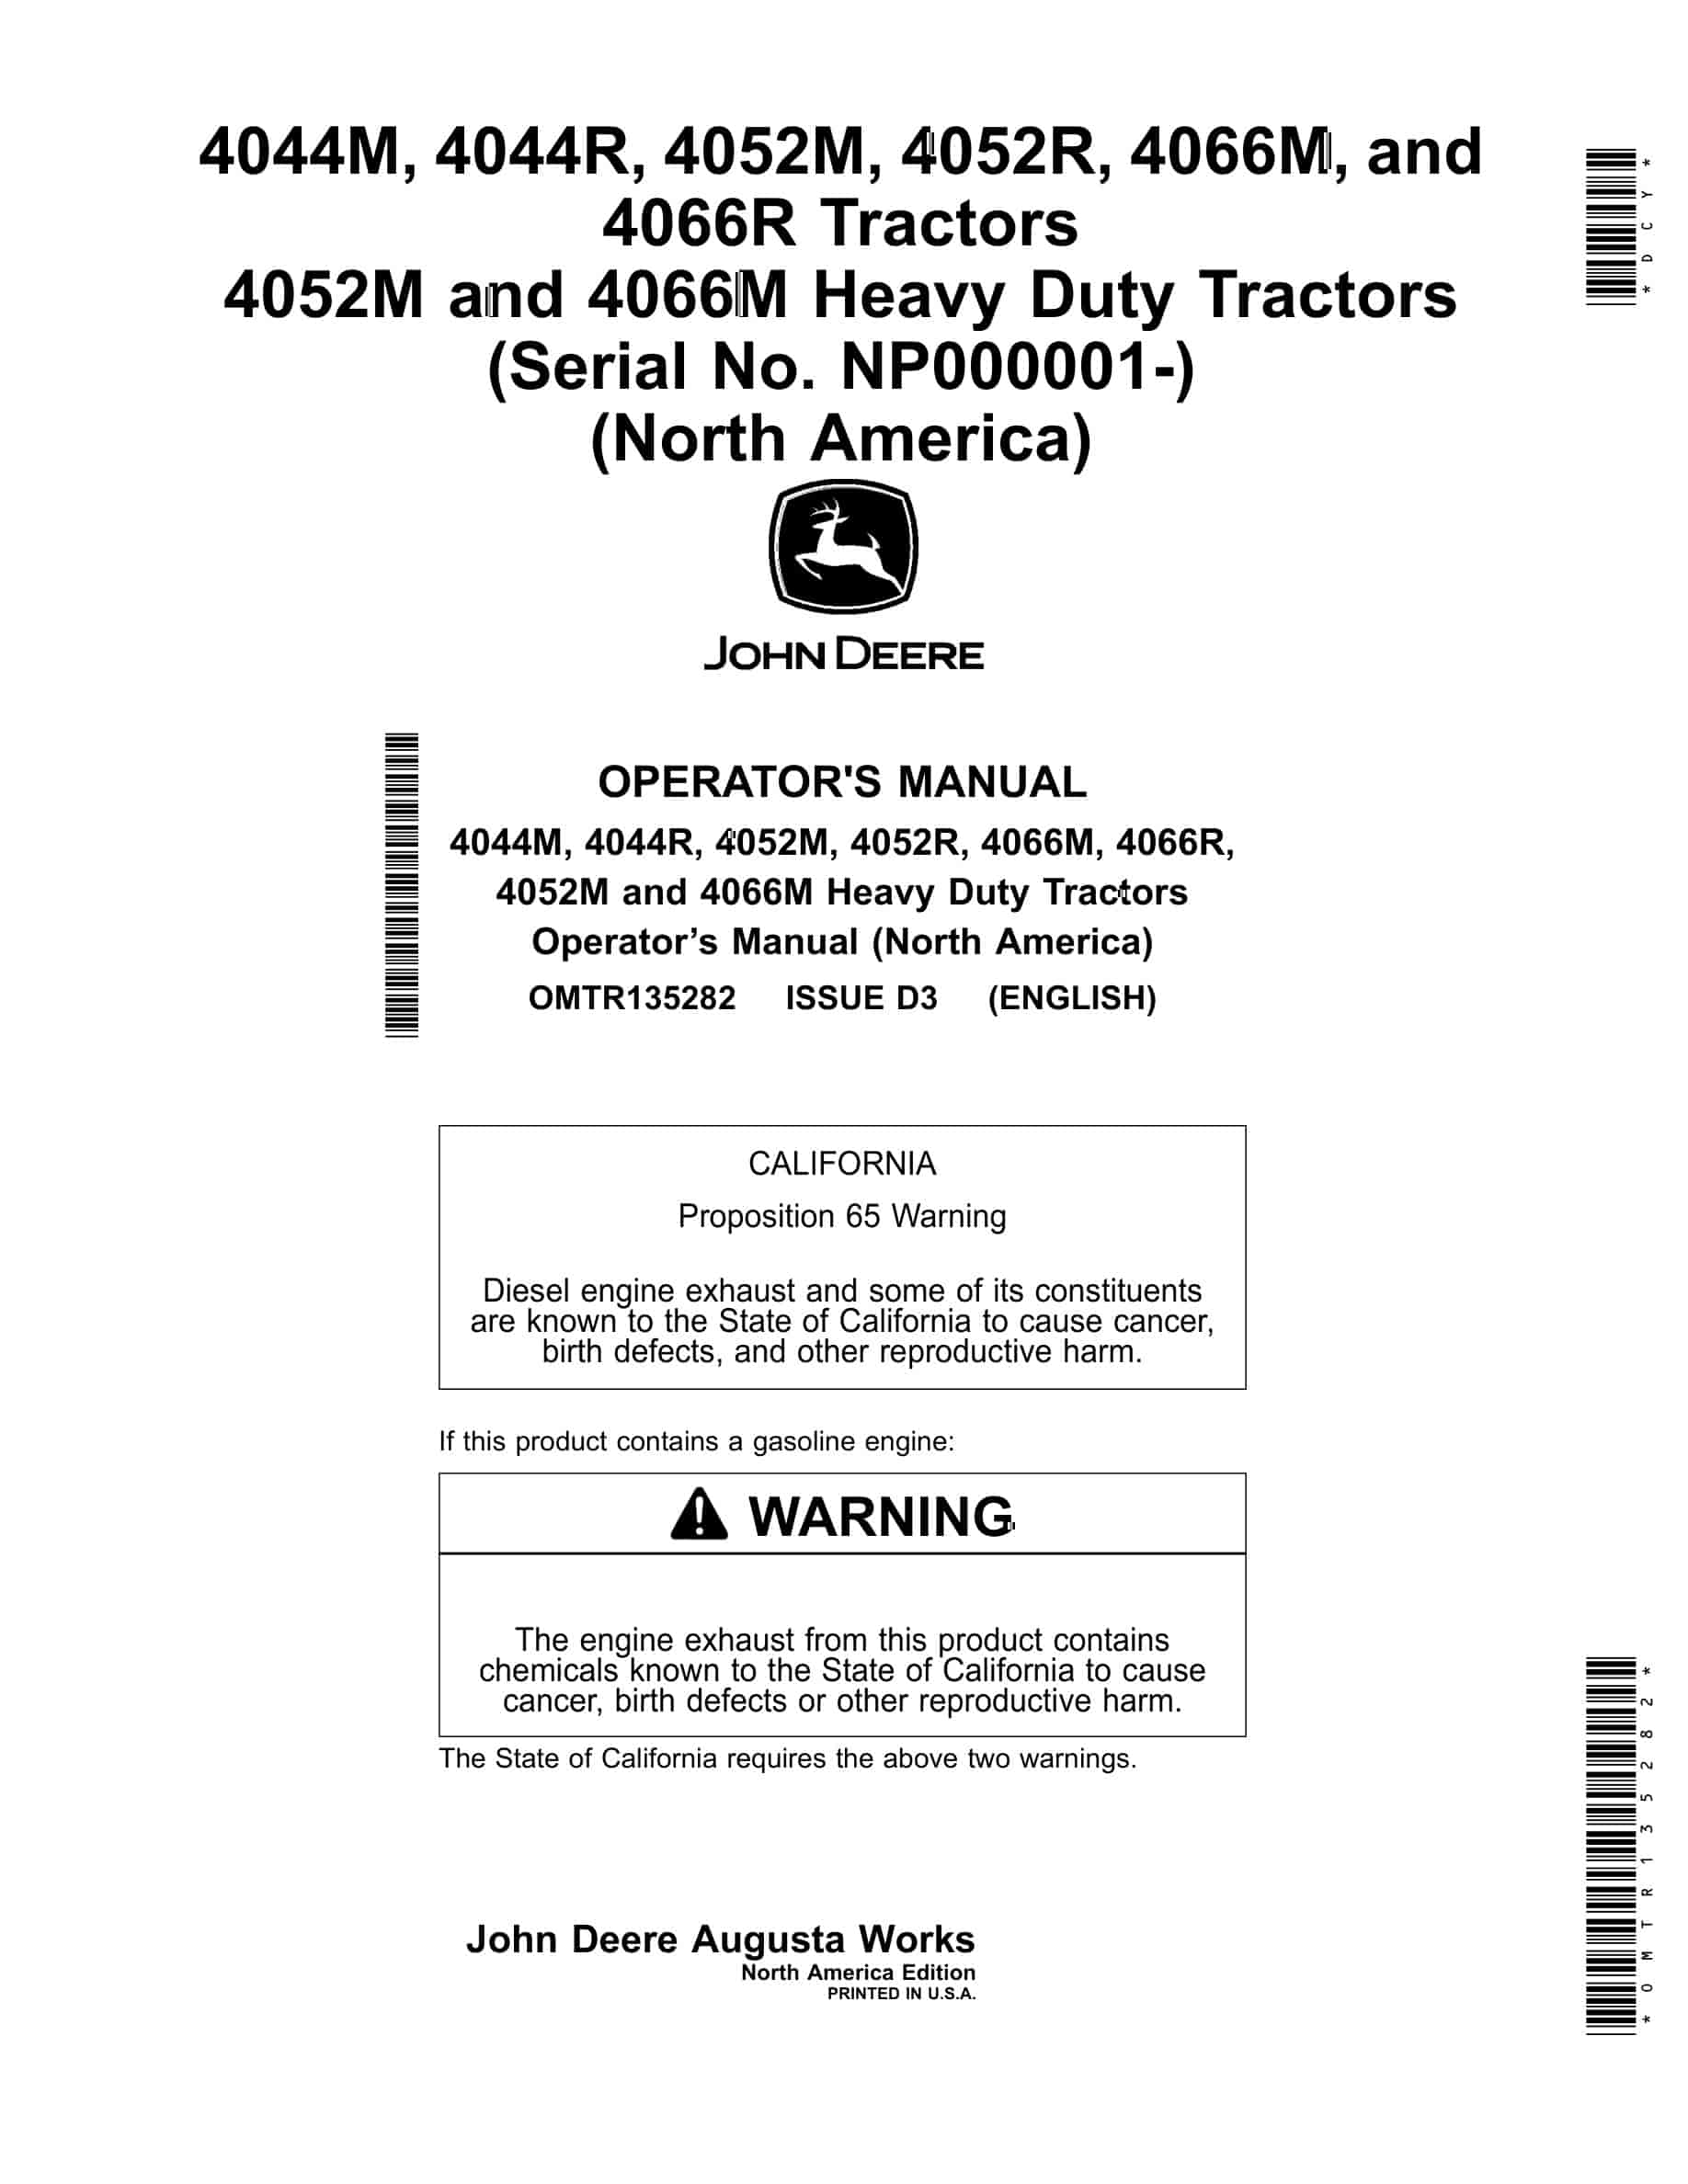 John Deere 4044m, 4044r, 4052m, 4052r, 4066m, 4066r, 4052m And 4066m Heavy Duty Tractors Operator Manuals OMTR135282-1